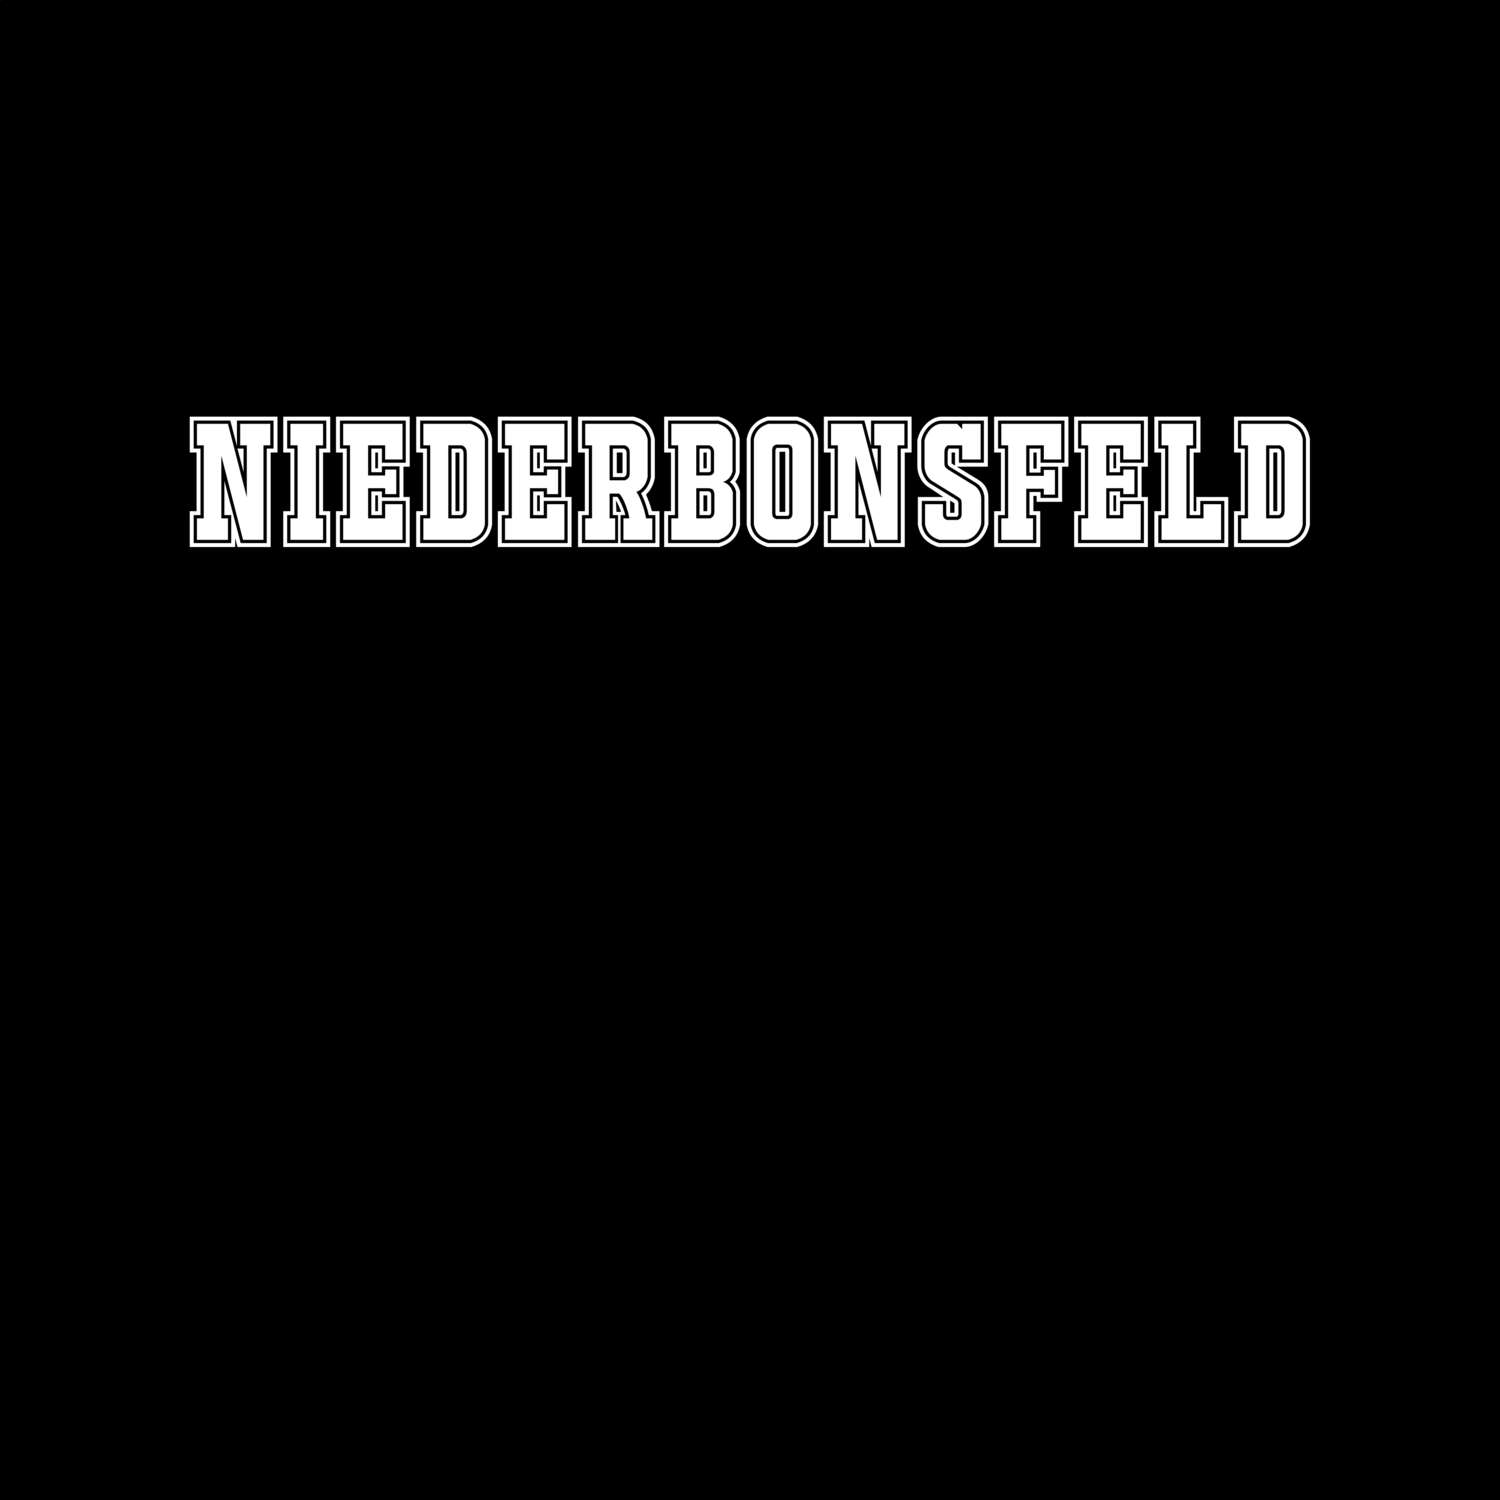 Niederbonsfeld T-Shirt »Classic«